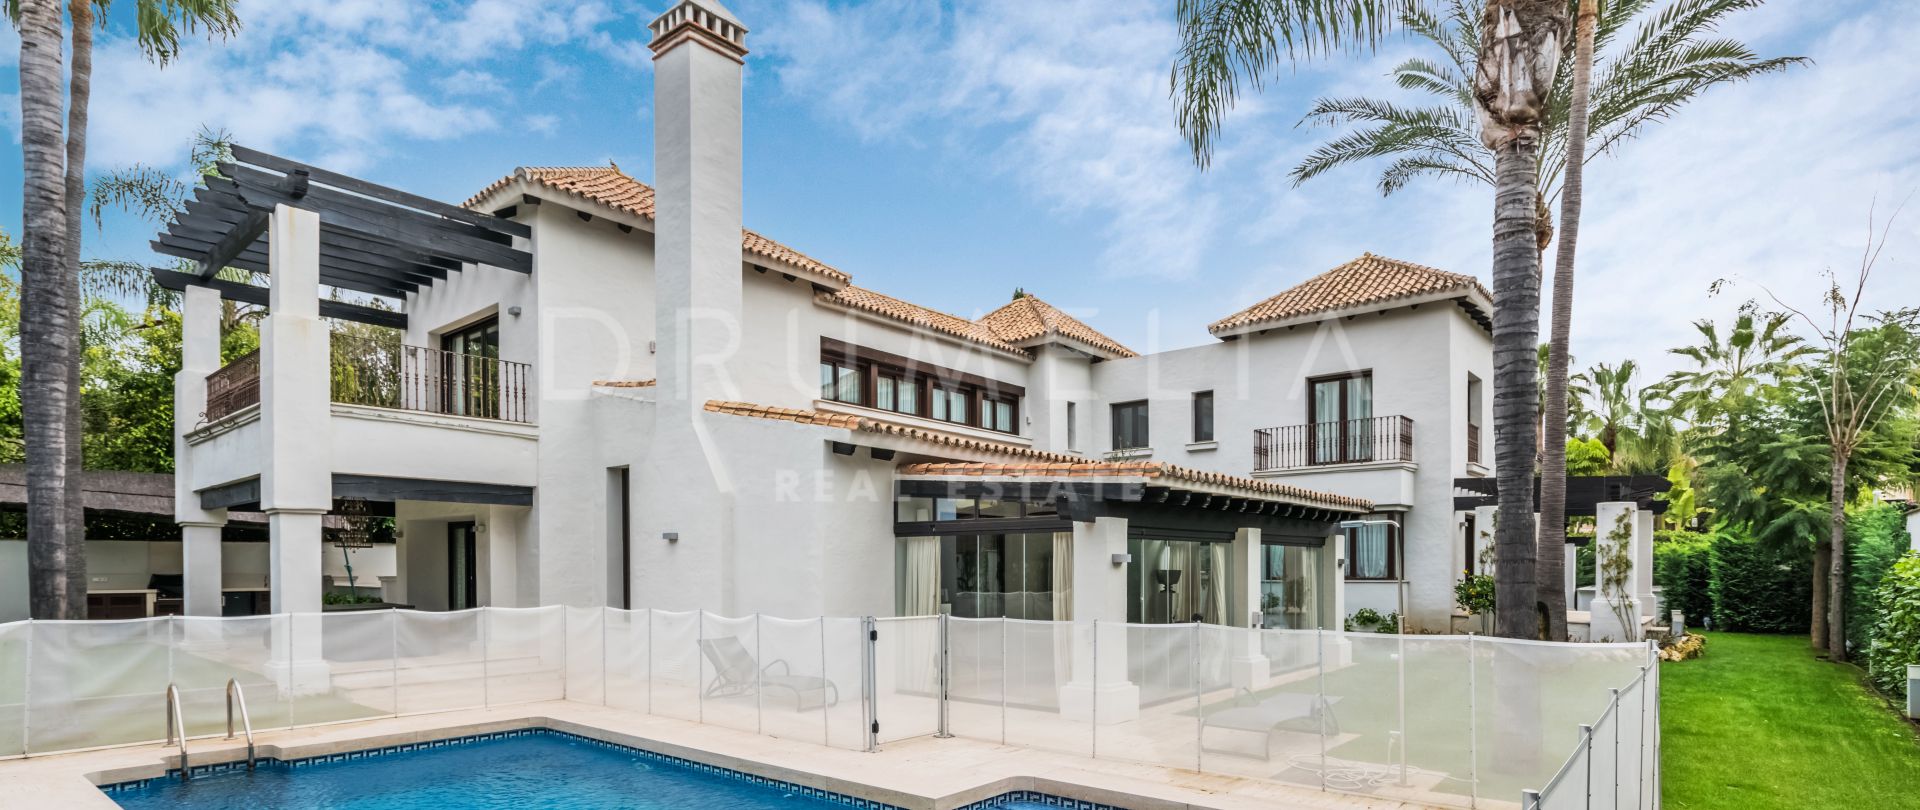 Prachtige moderne mediterrane luxe villa, Marbella - Puerto Banus, Marbella